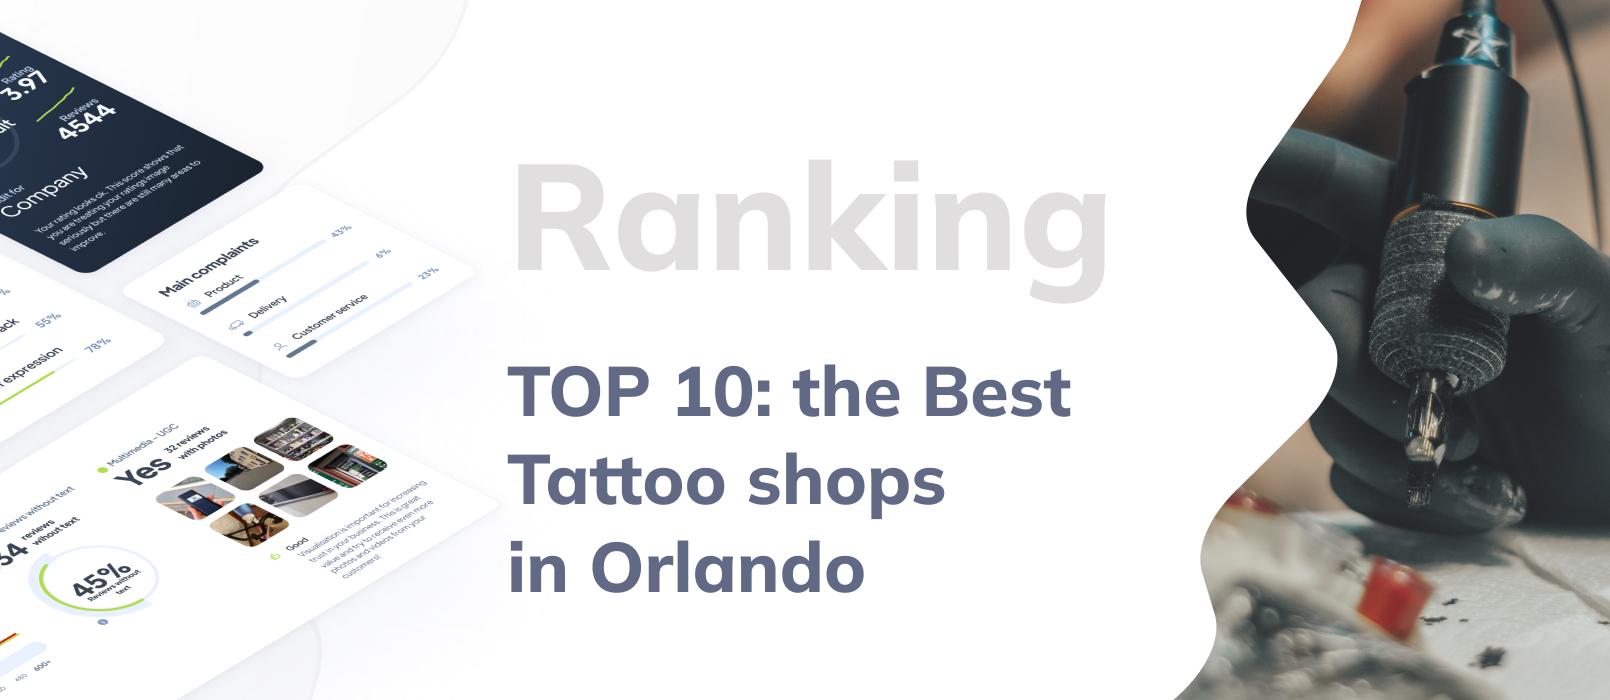 10 Best Orlando Tattoo Shops - Ranking of the Best Tattoo Shops in Orlando